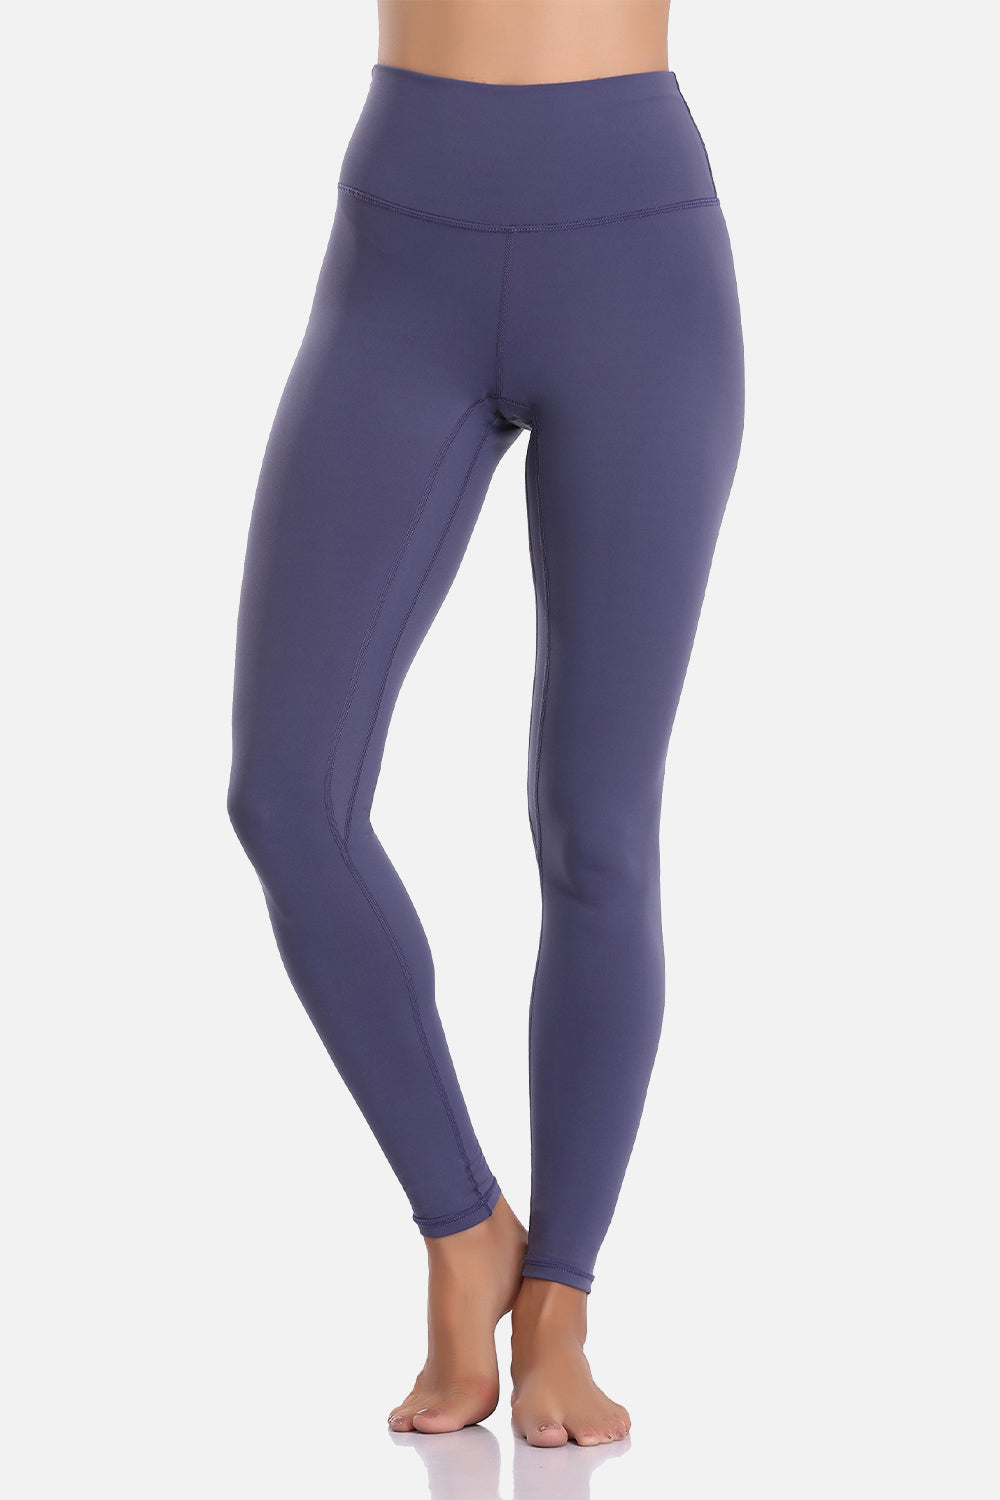 Ultra Soft Colorfulkoala Womens High Waist Yoga Leggings 7/8 Length Fitness Yoga  Pants With Pockets From Deli1188, $8.1